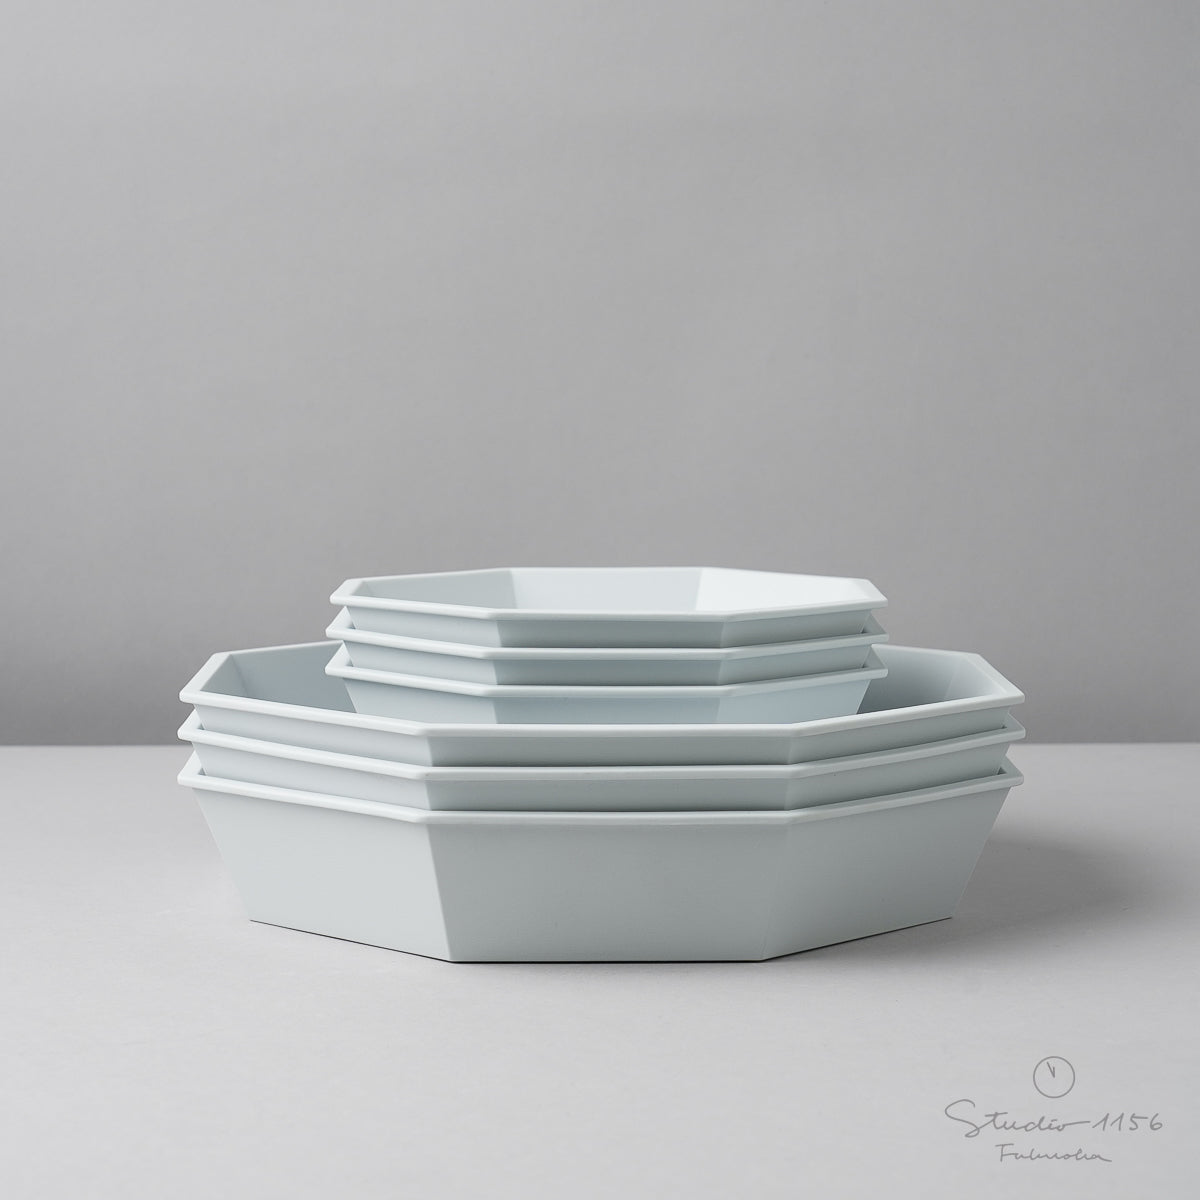 有田焼 TY "Standard" Anise Bowl Grey 150/220 1616 / Arita Japan Studio1156